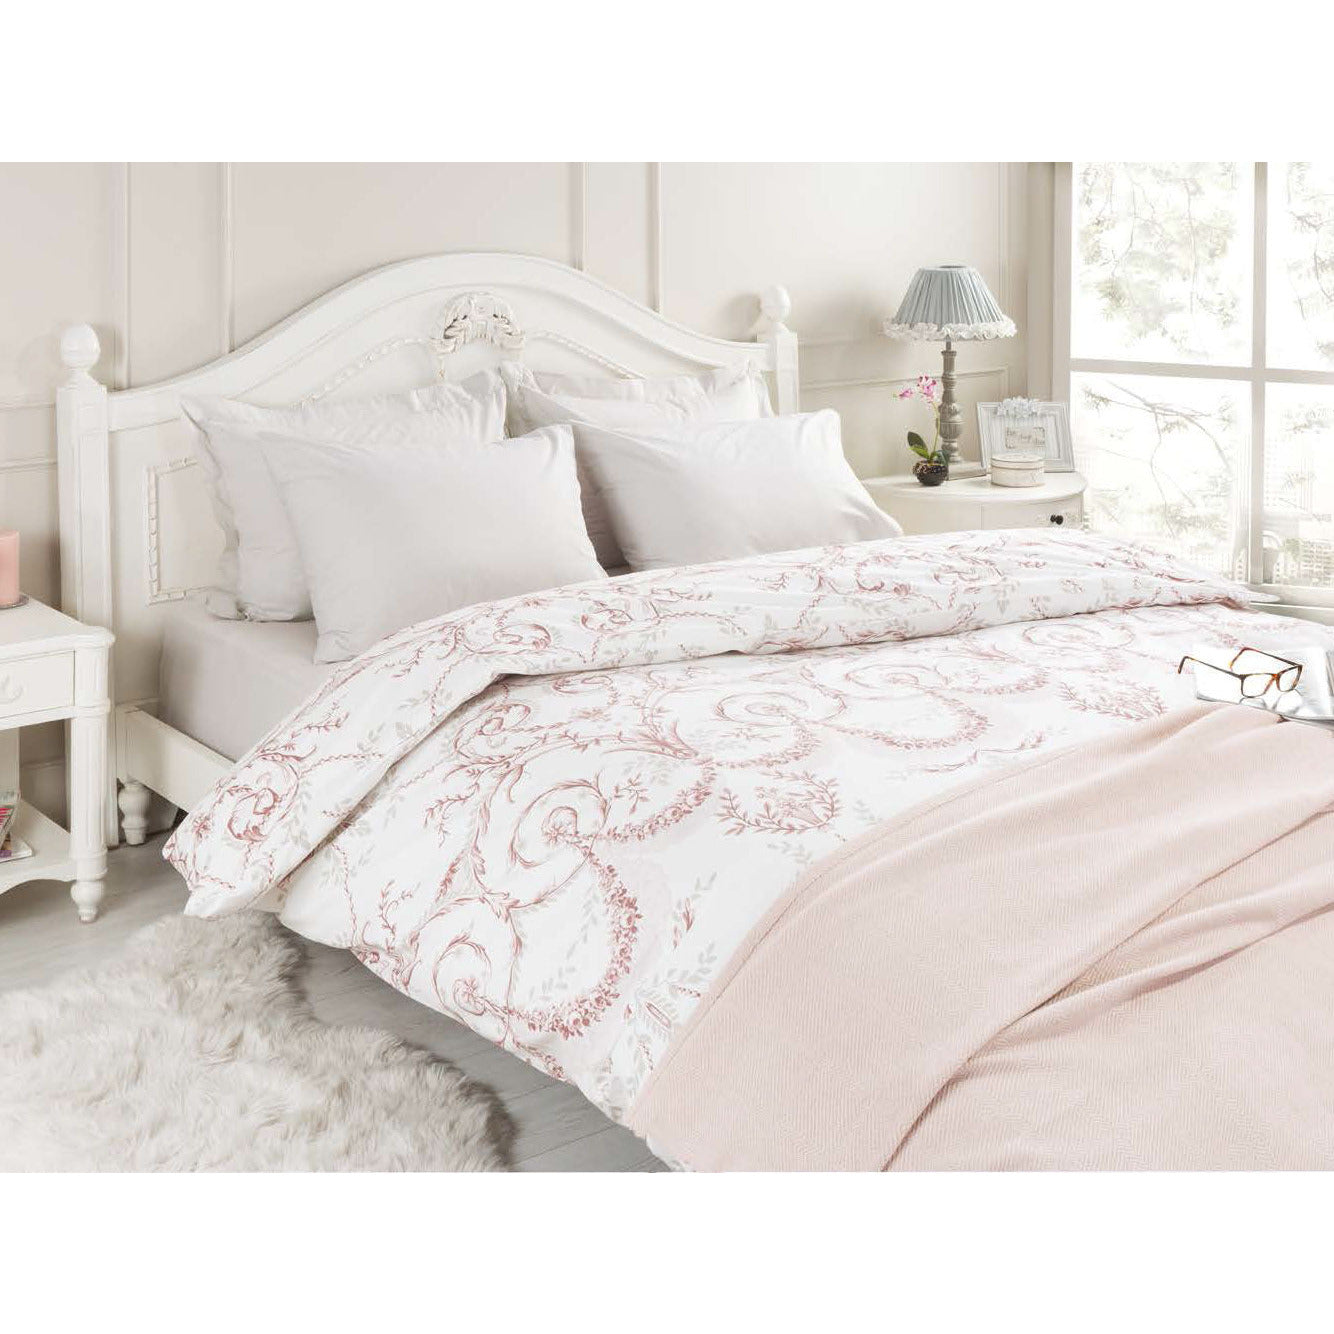 Madam Coco Lierre Cotton Ranforce Bed Linen Set - king